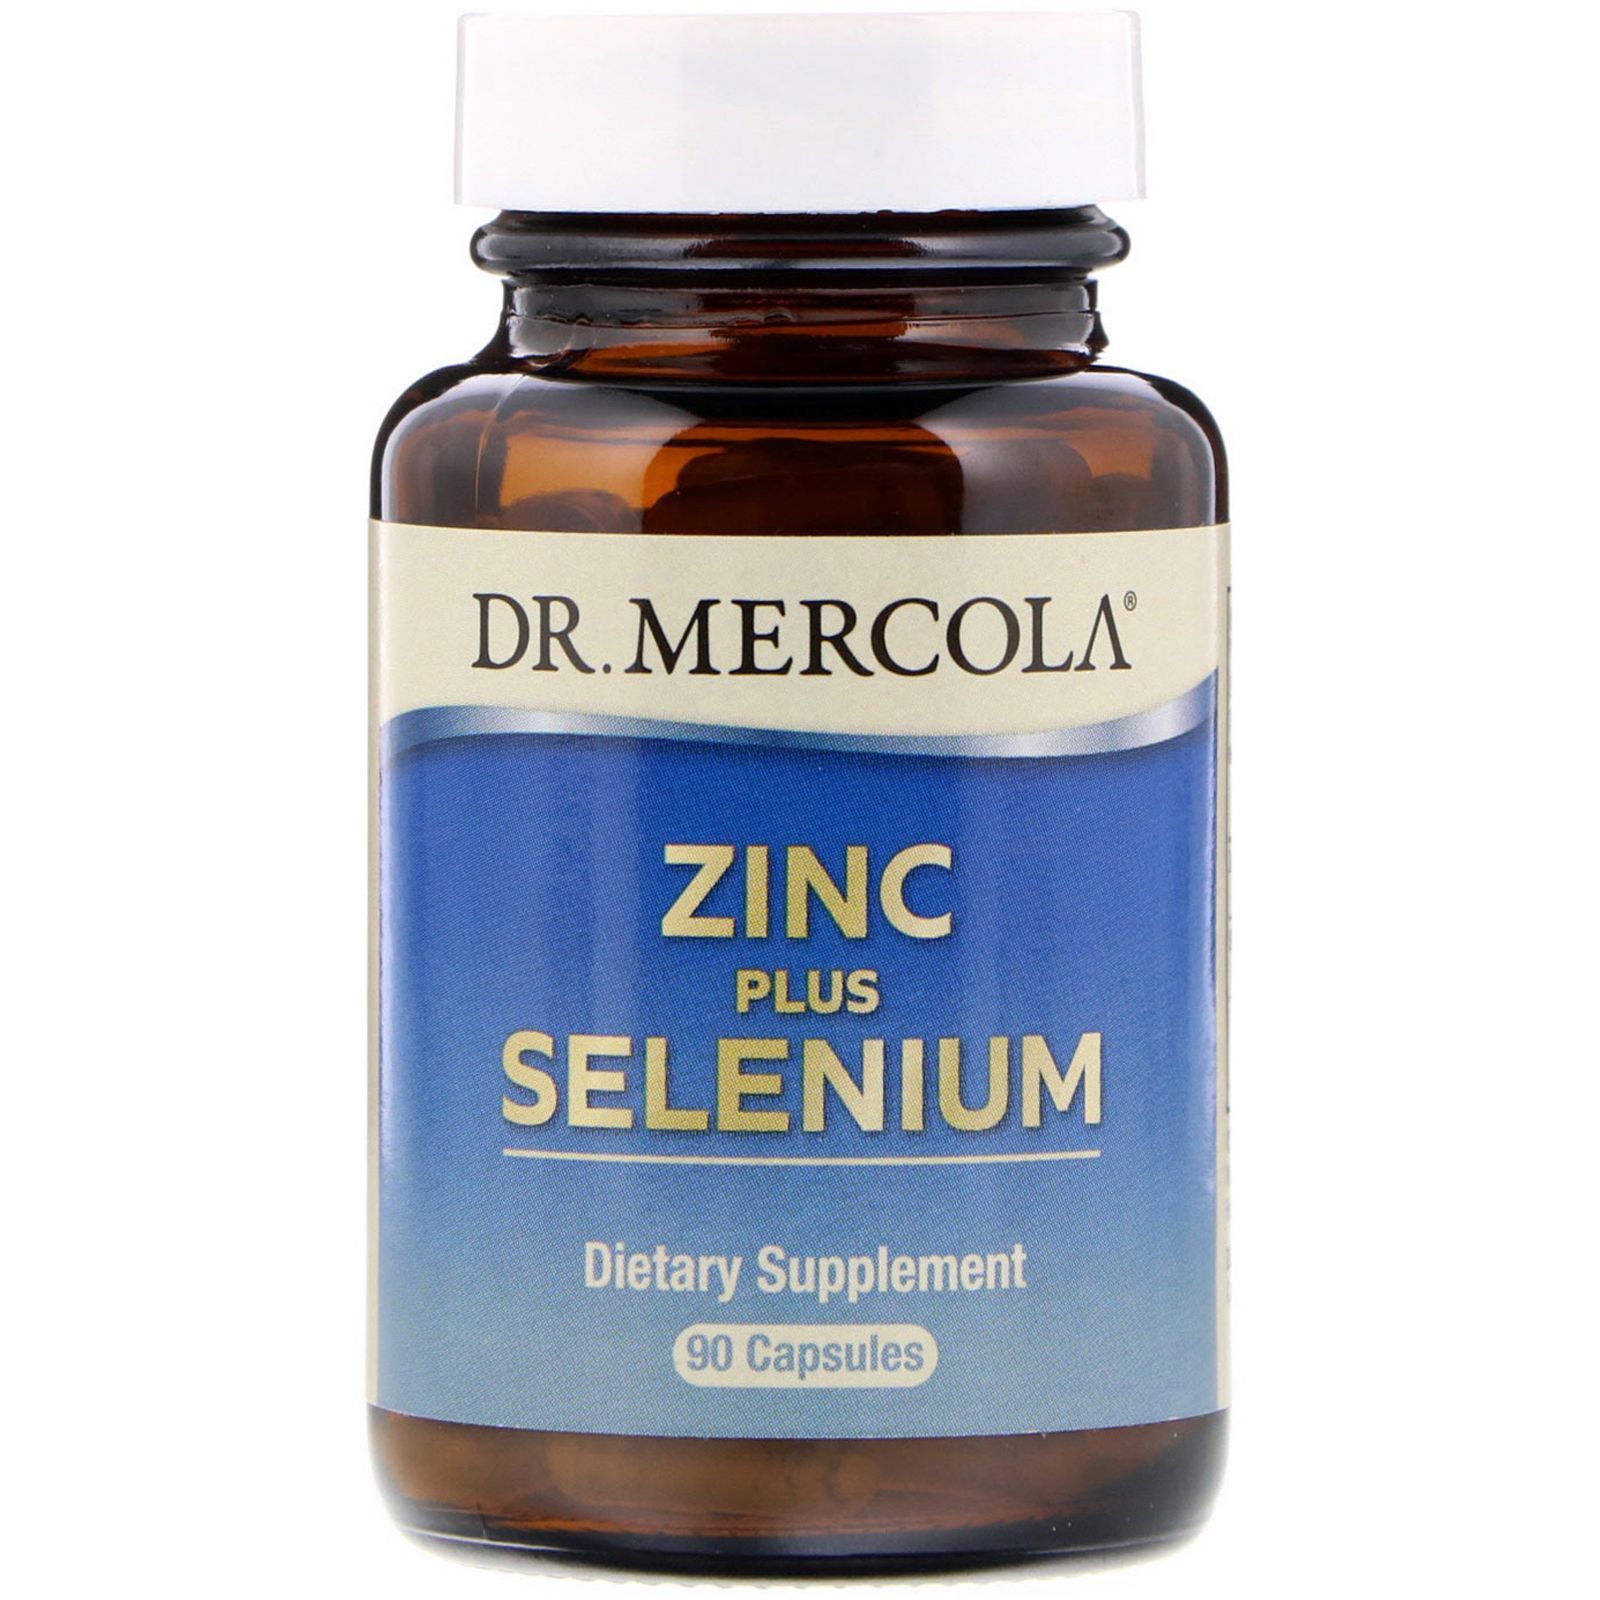 Селен сша. Zinc селениум витамины. Цинк Dr Mercola. Капсулы селениум плюс цинк. Цинк и селен от доктора Меркола.